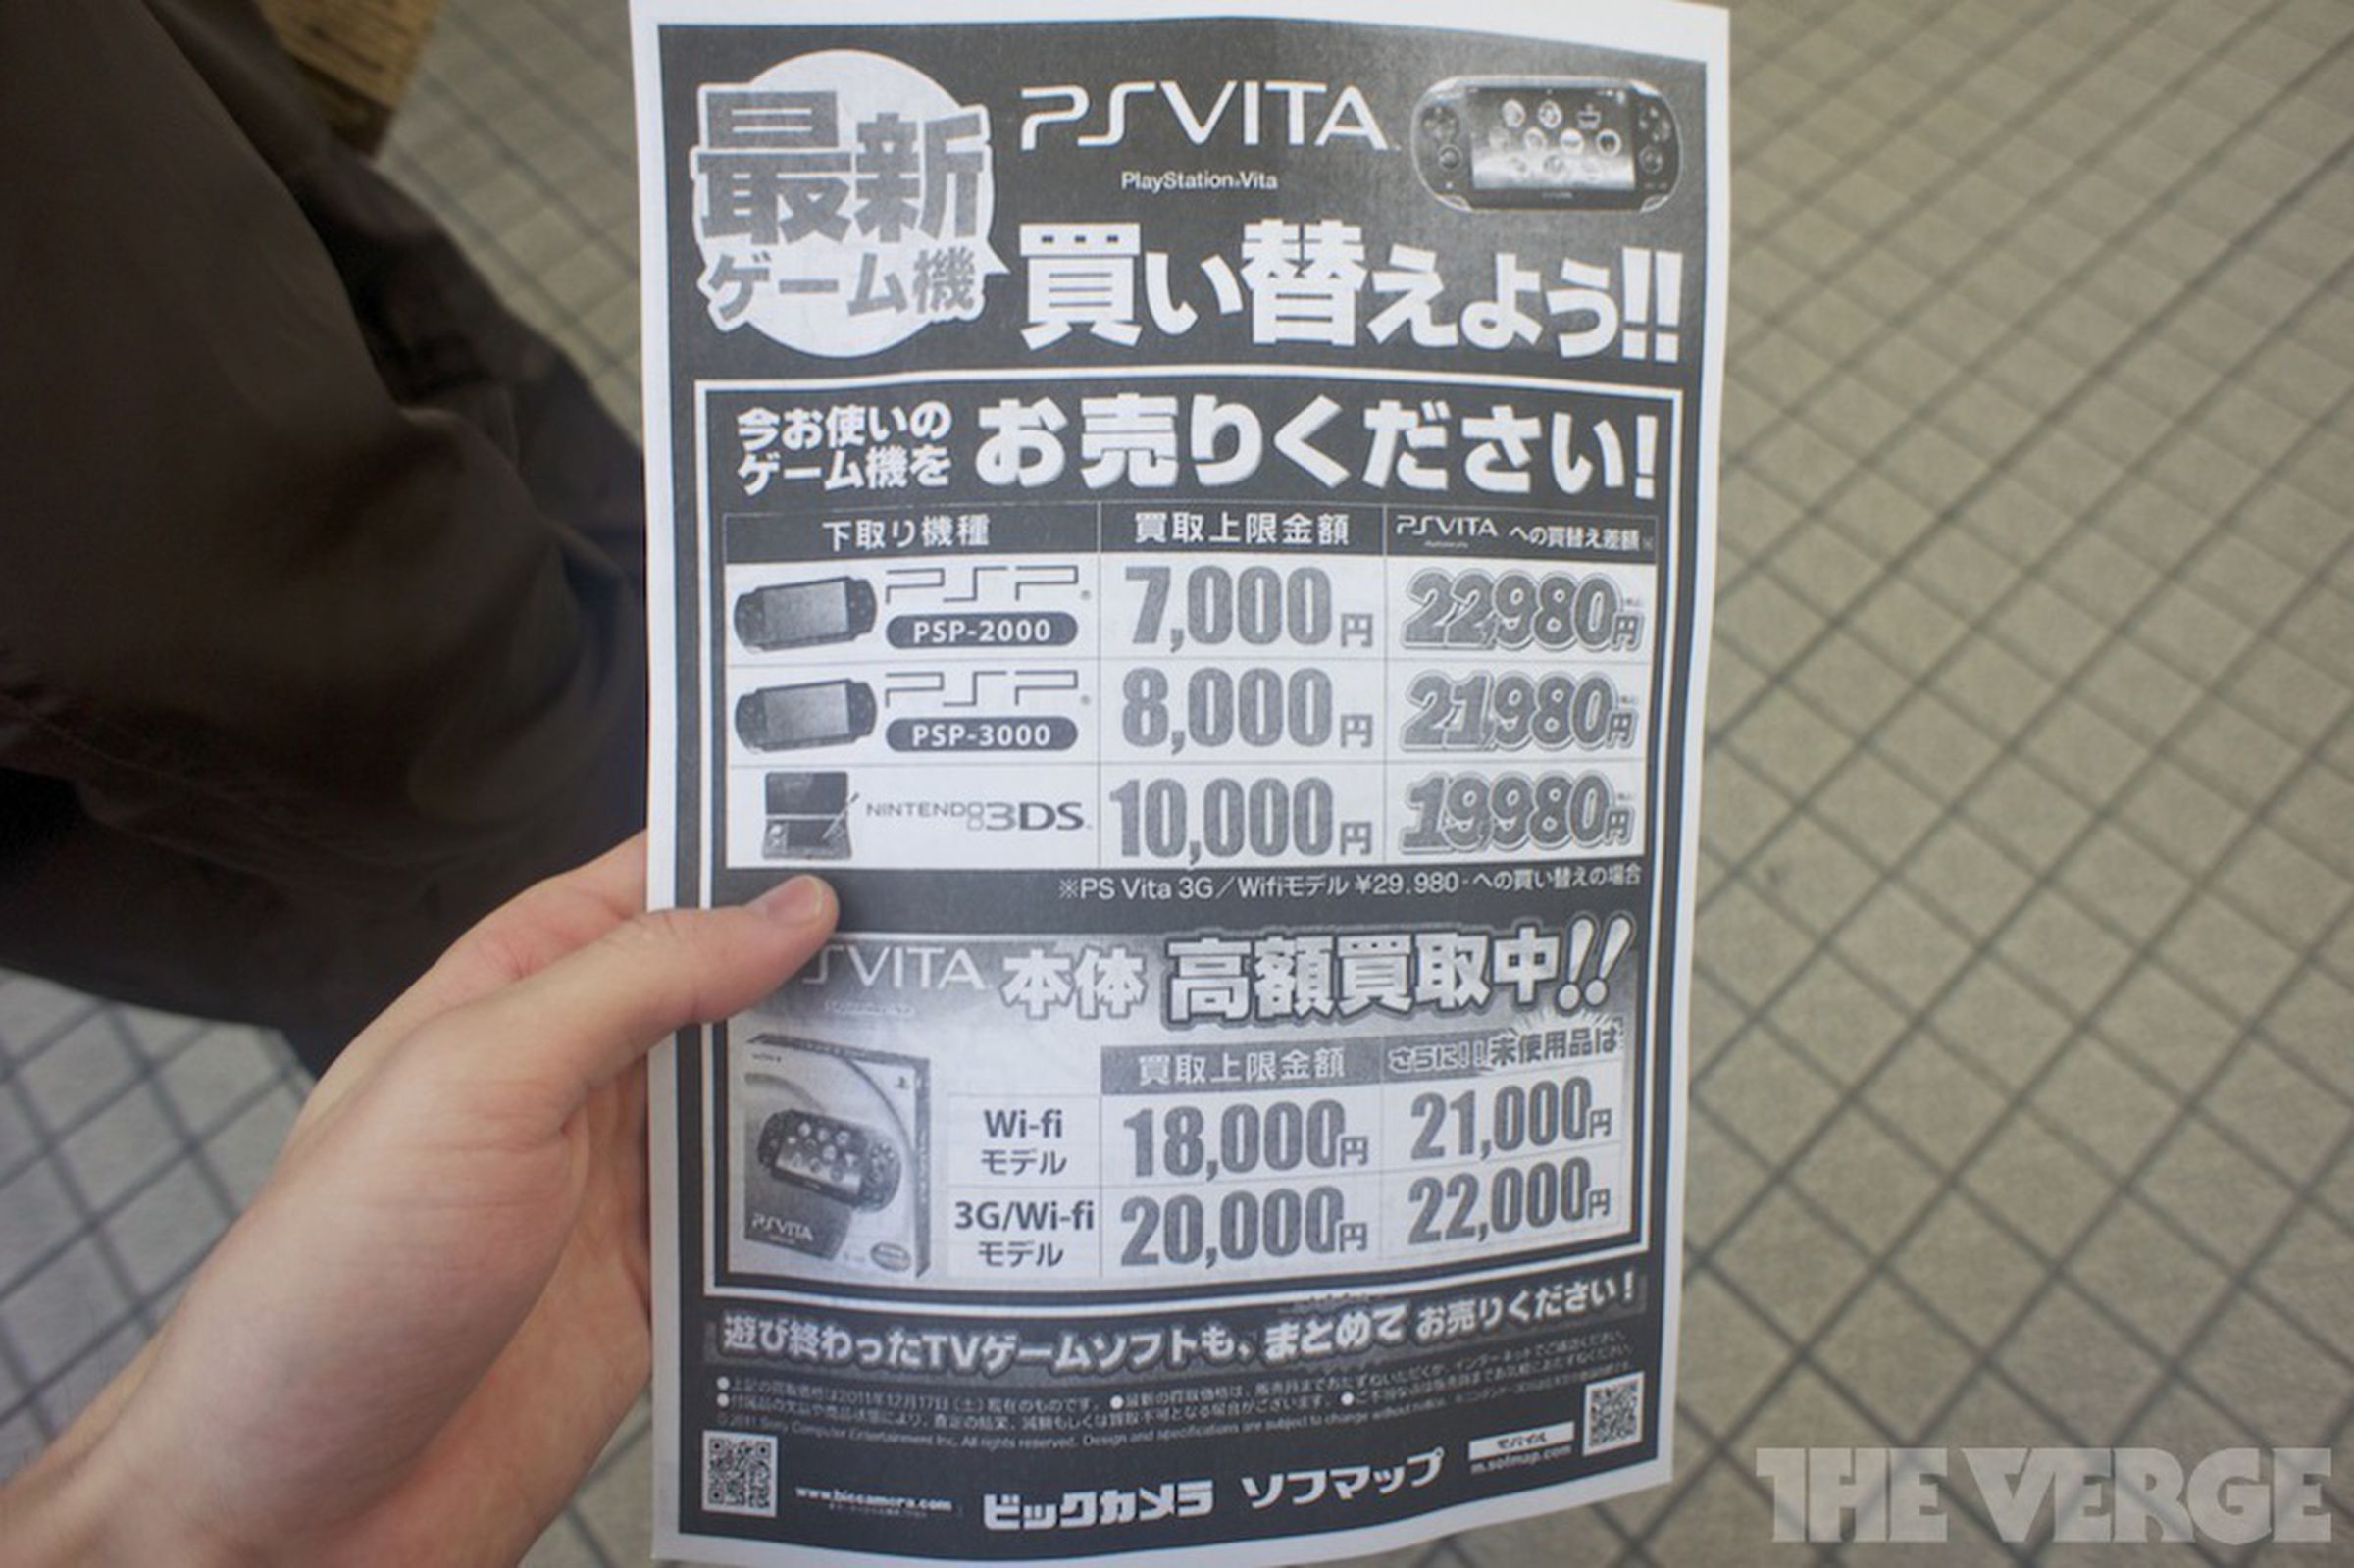 Sony PlayStation Vita Japanese launch photos